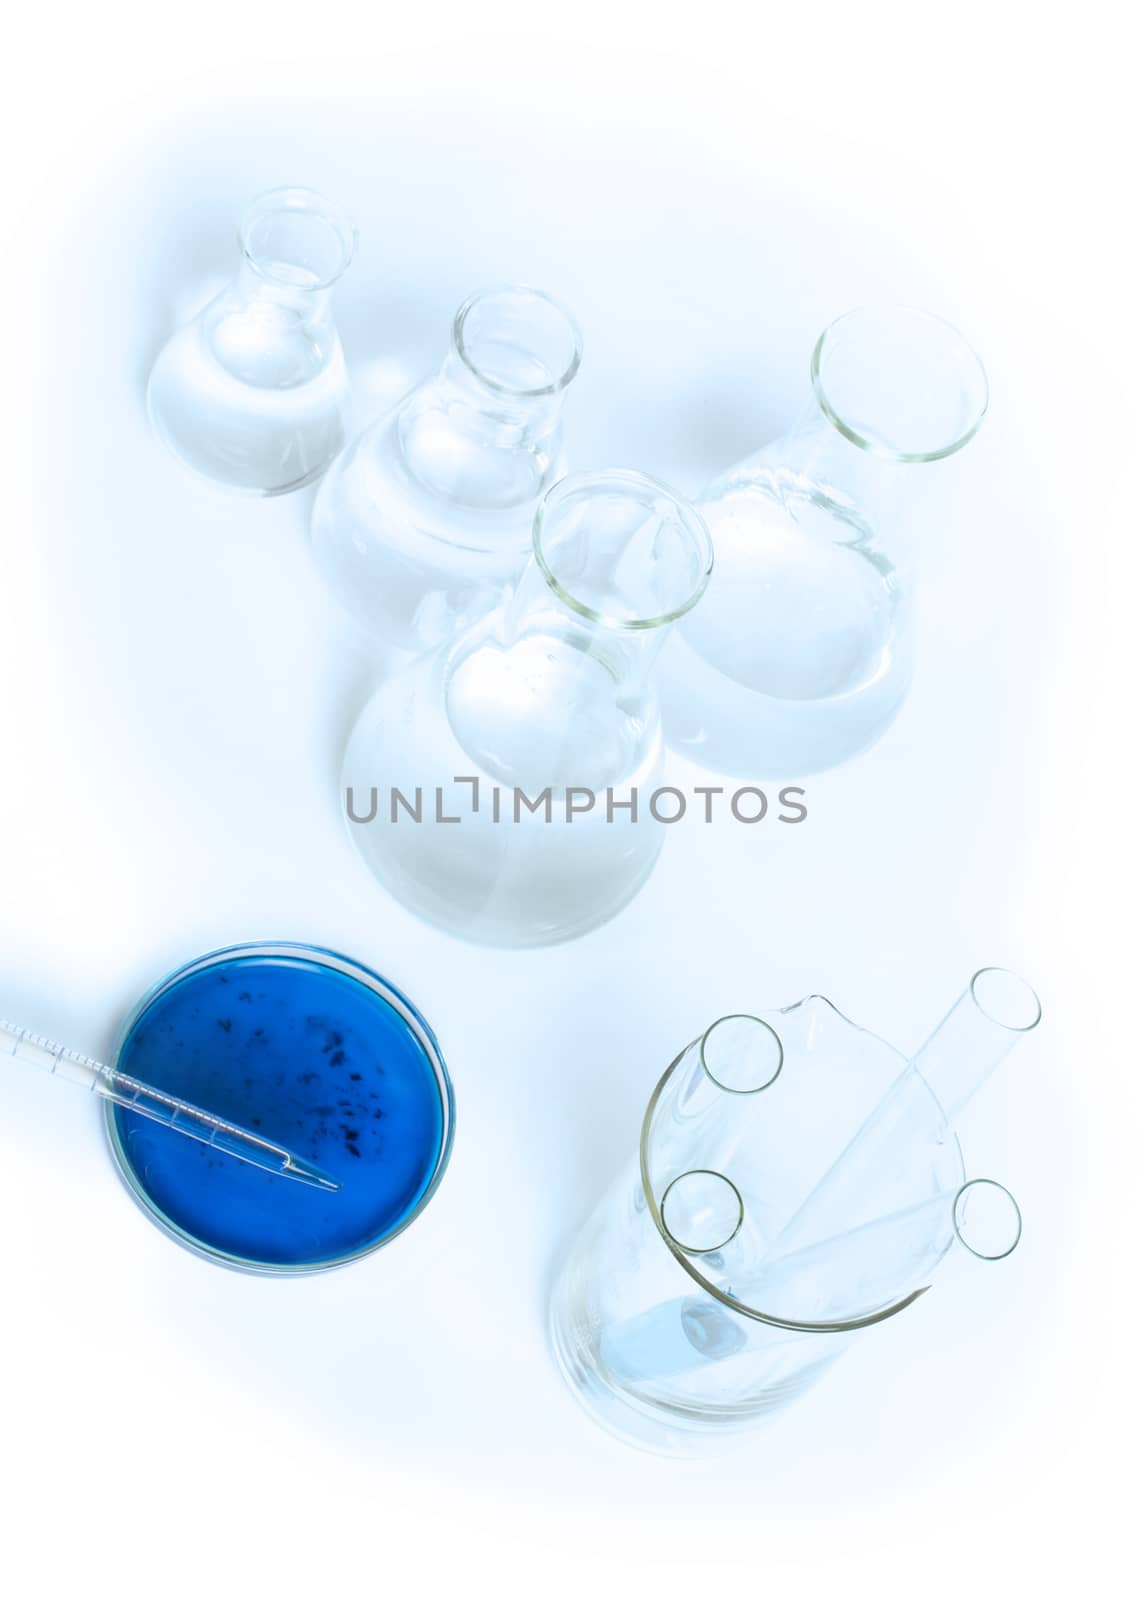 Laboratory glassware equipment by deyan_georgiev